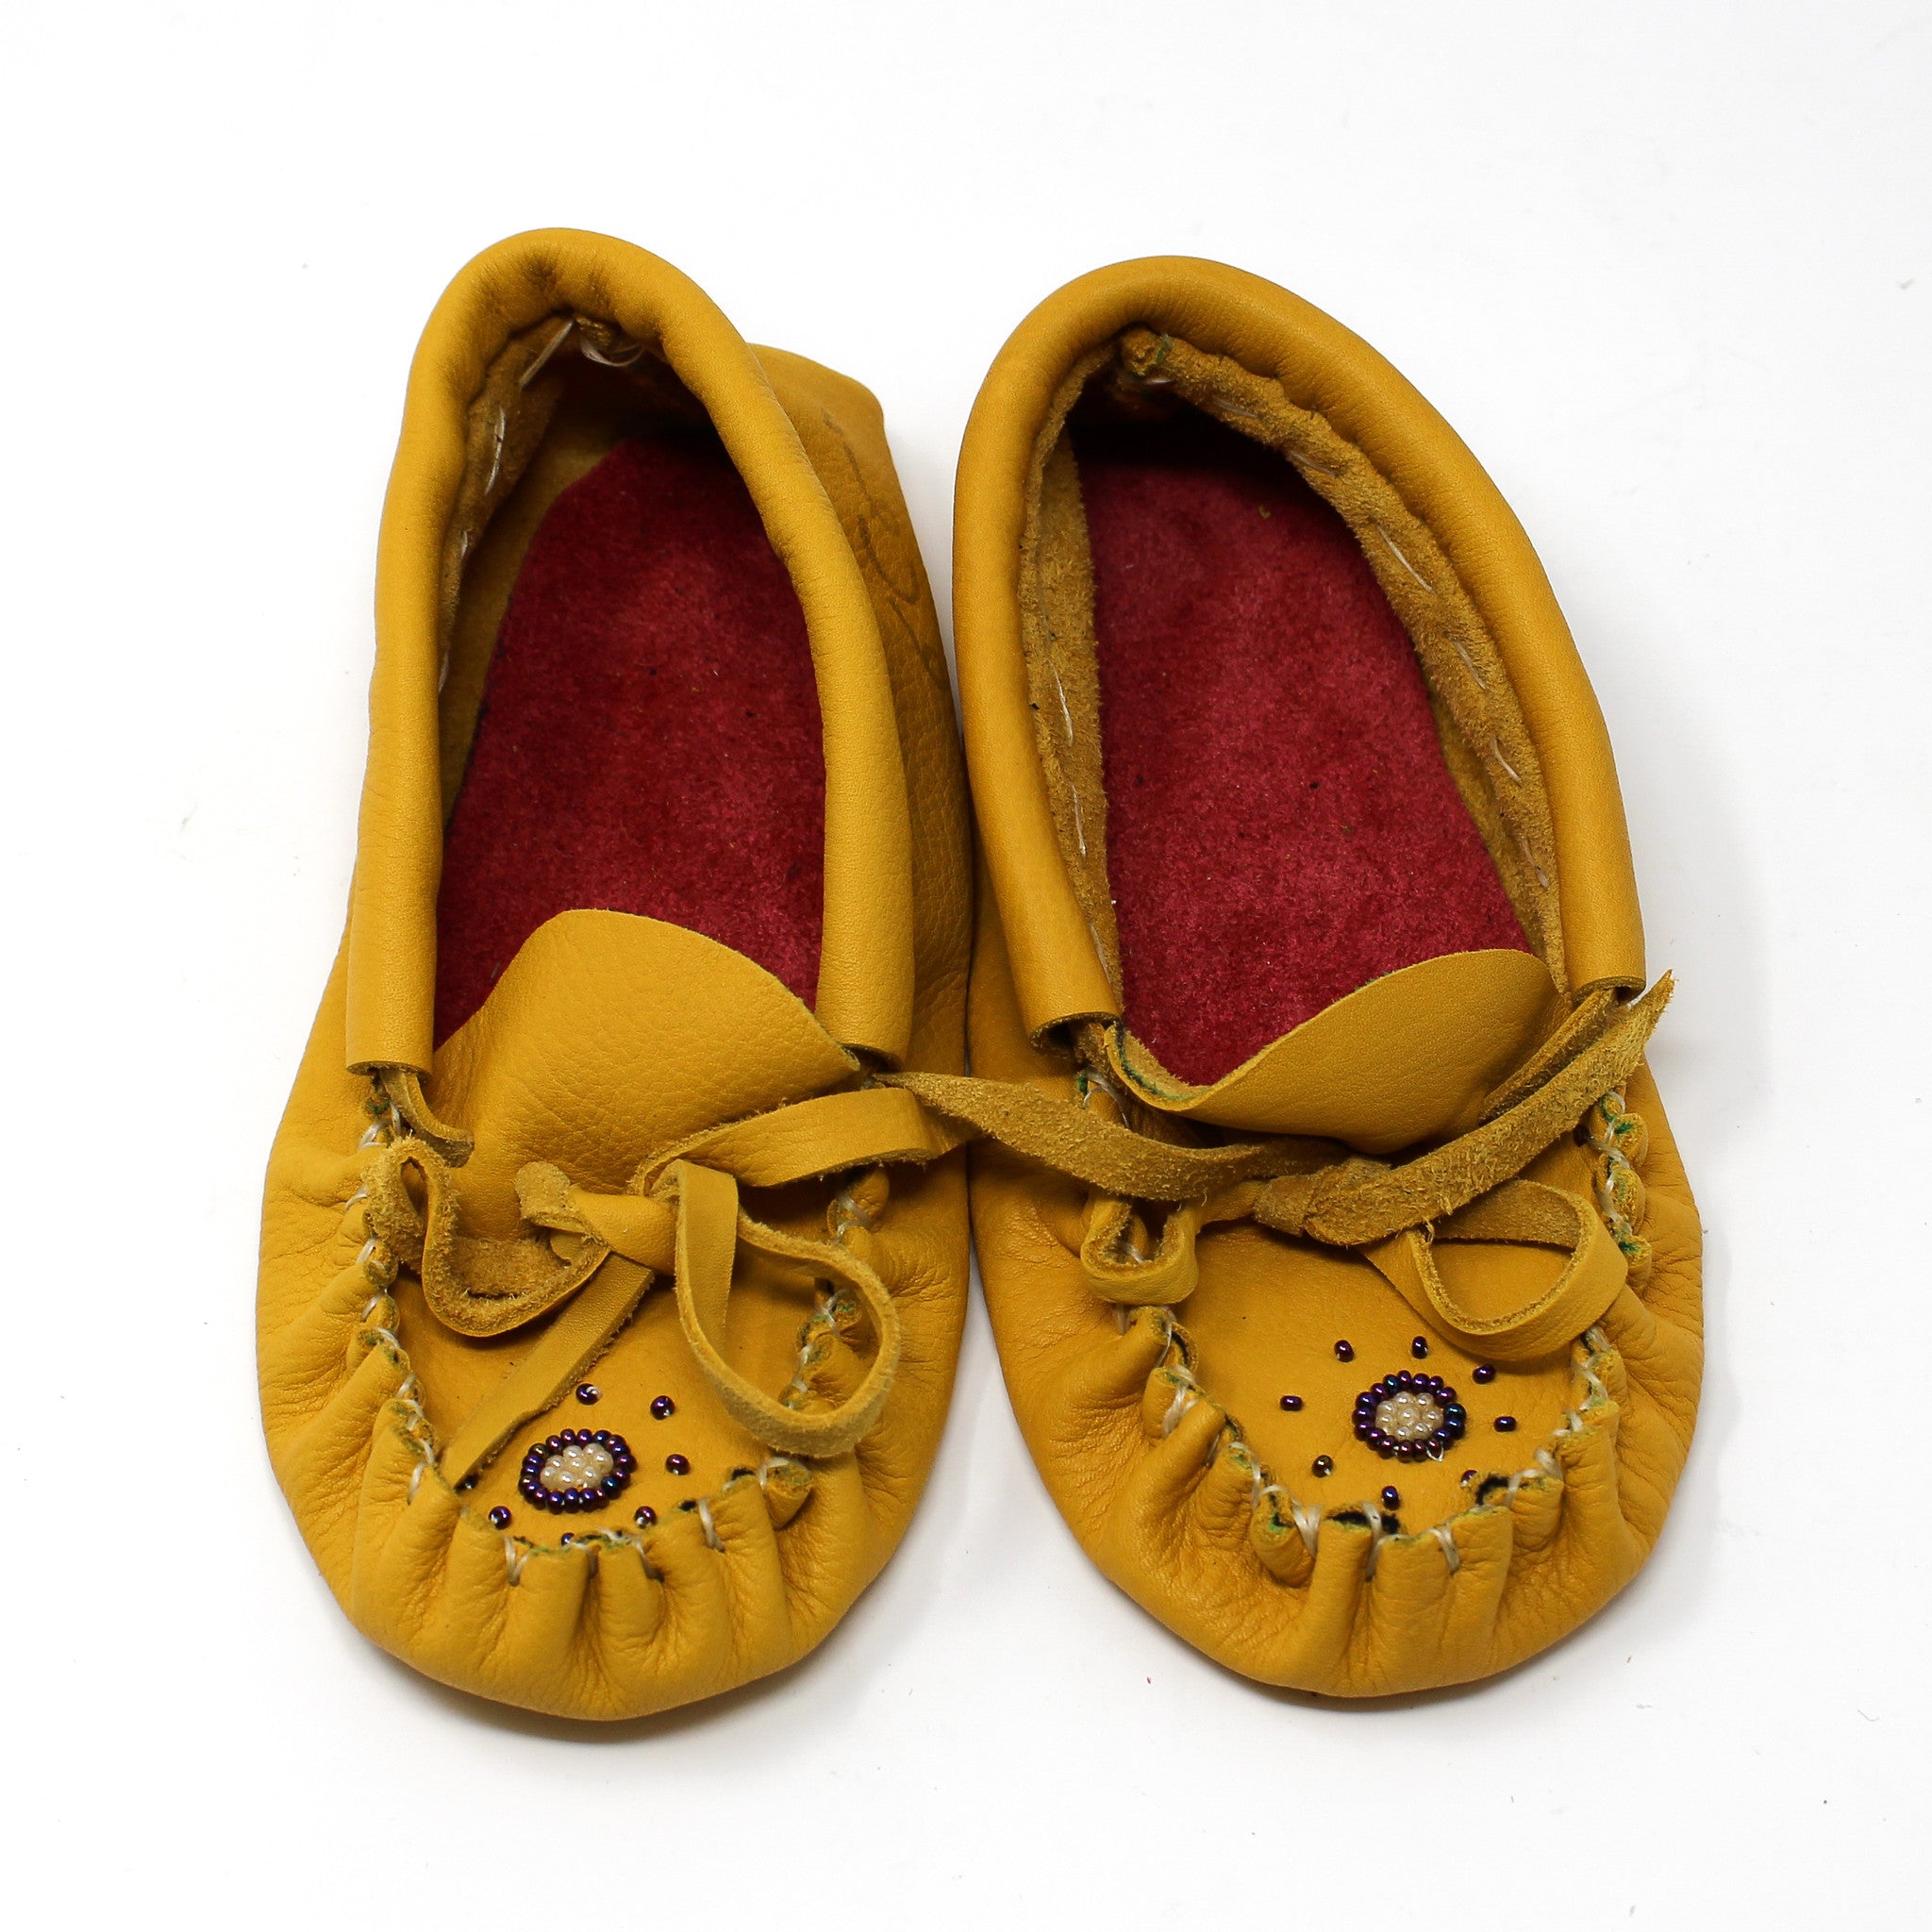 Rawhide slippers